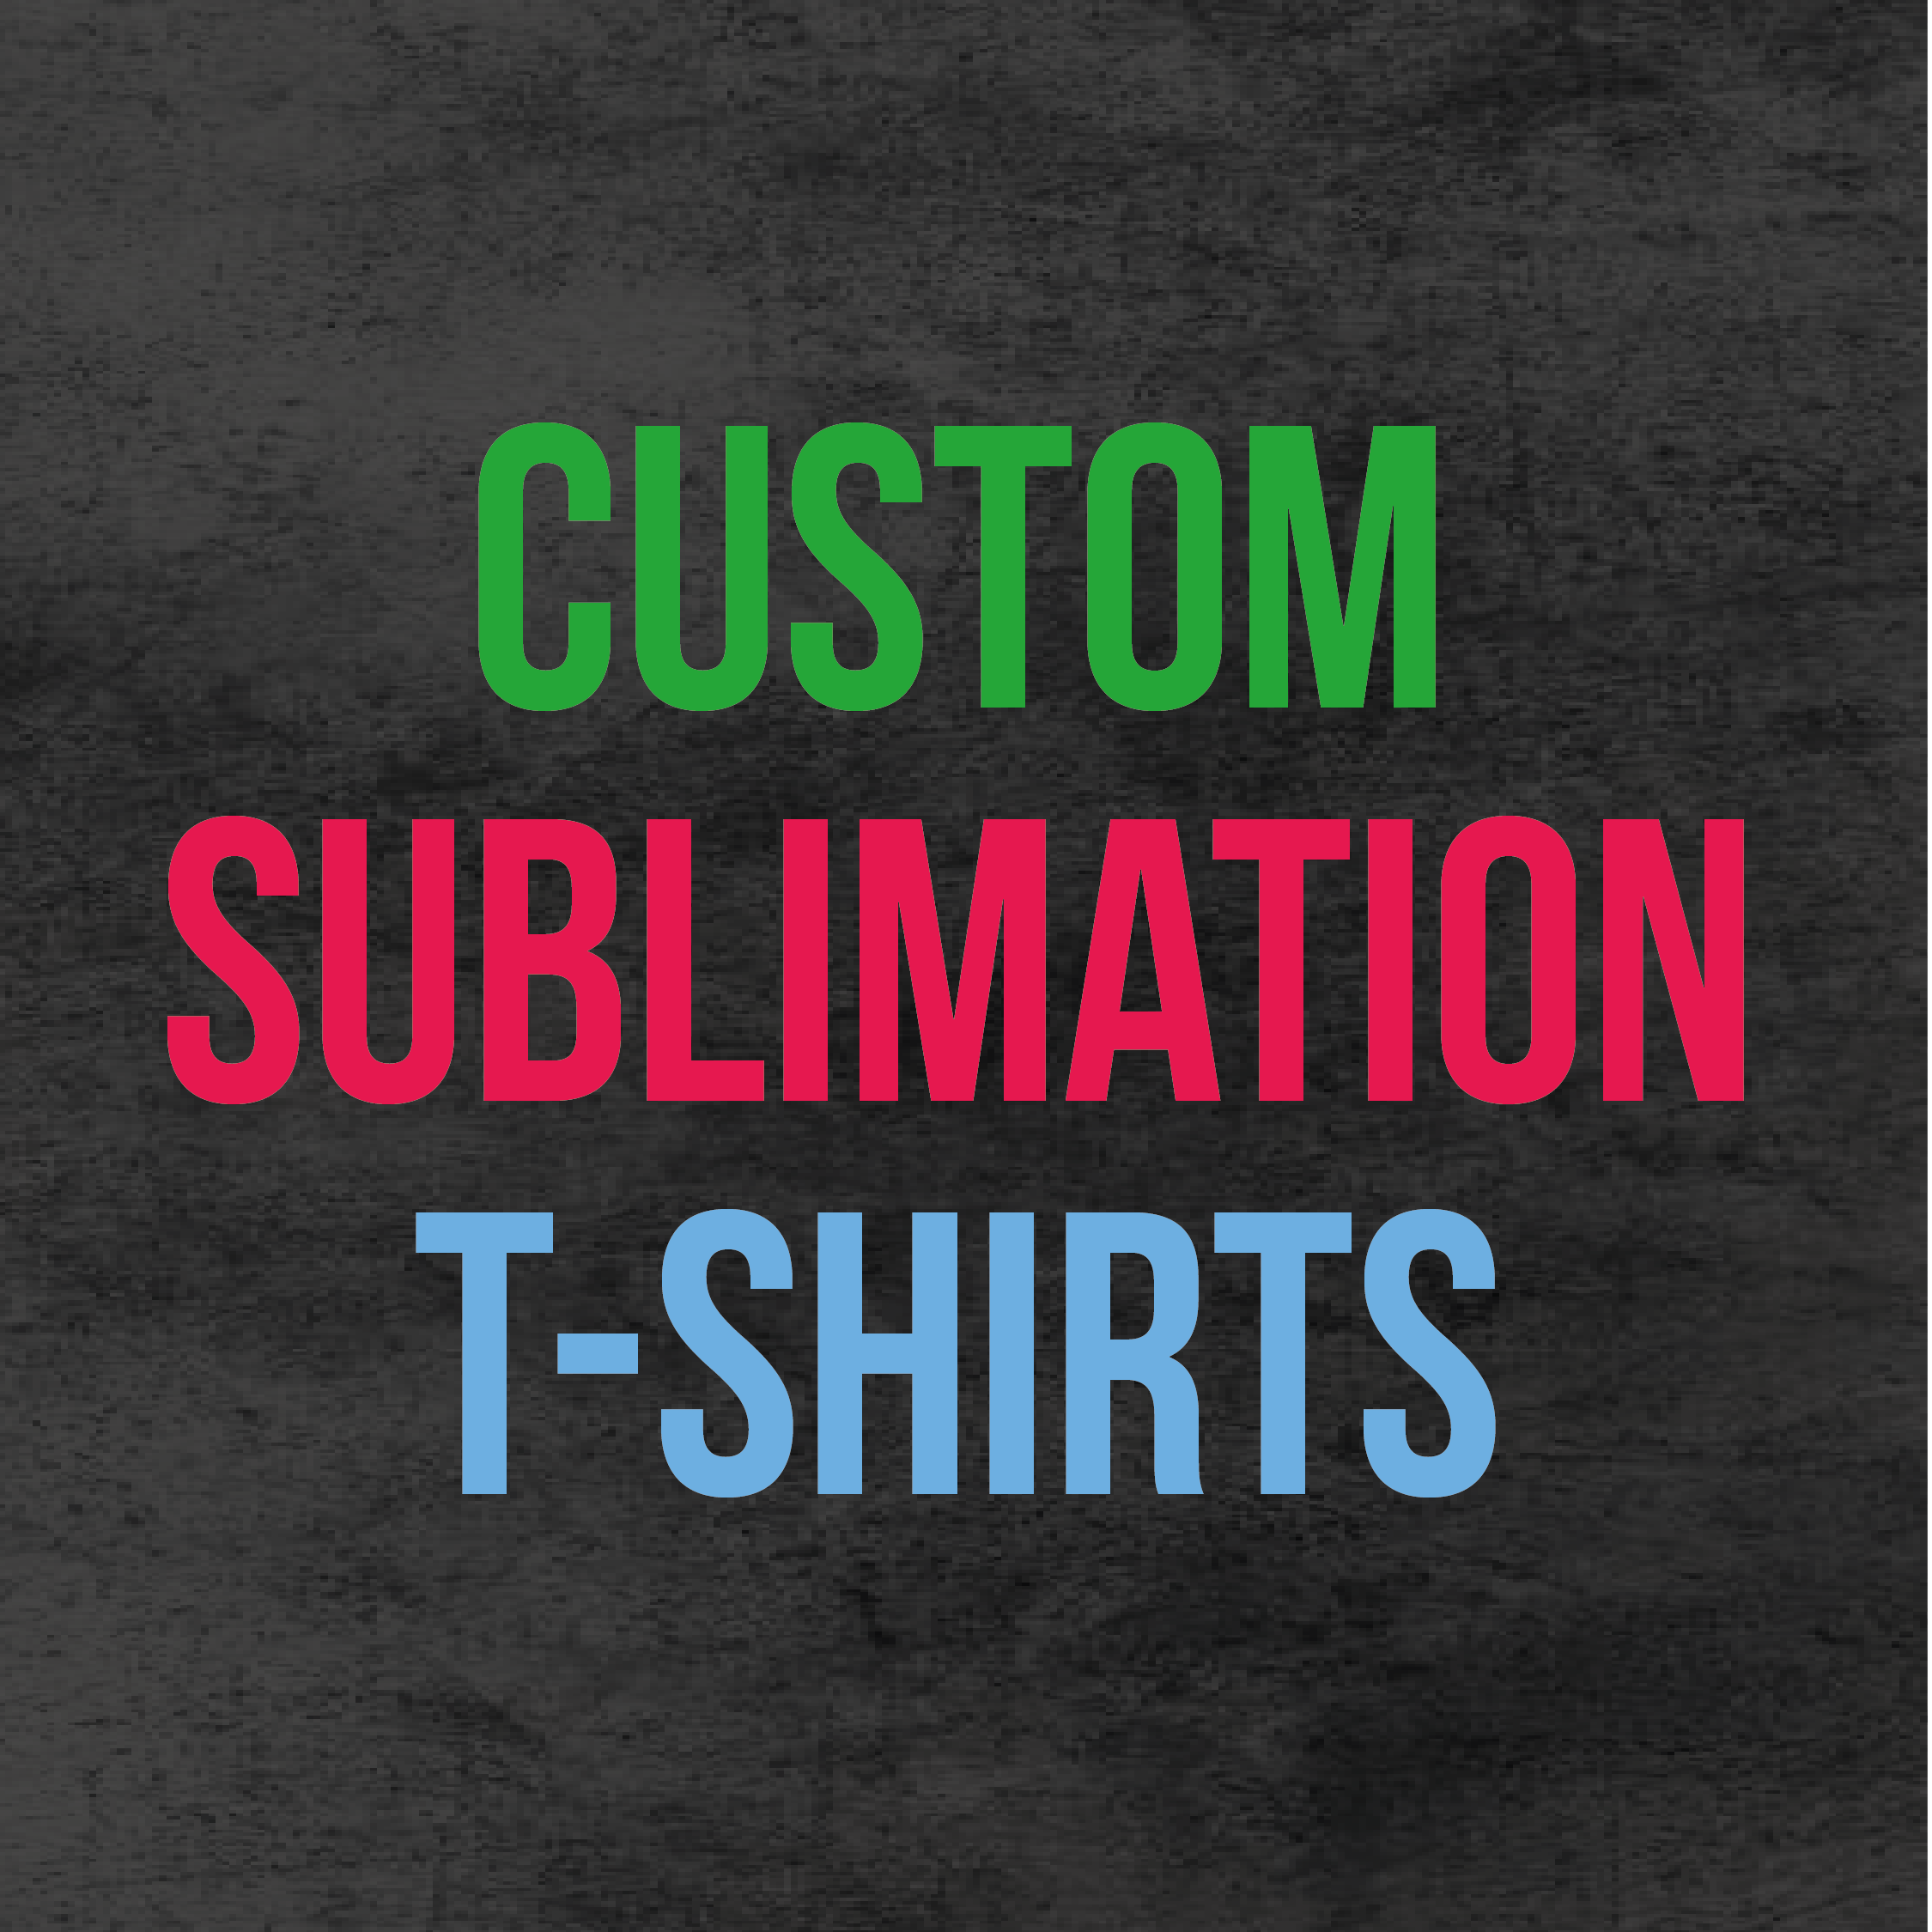 Fully Custom Team T-Shirts - Sample of 1